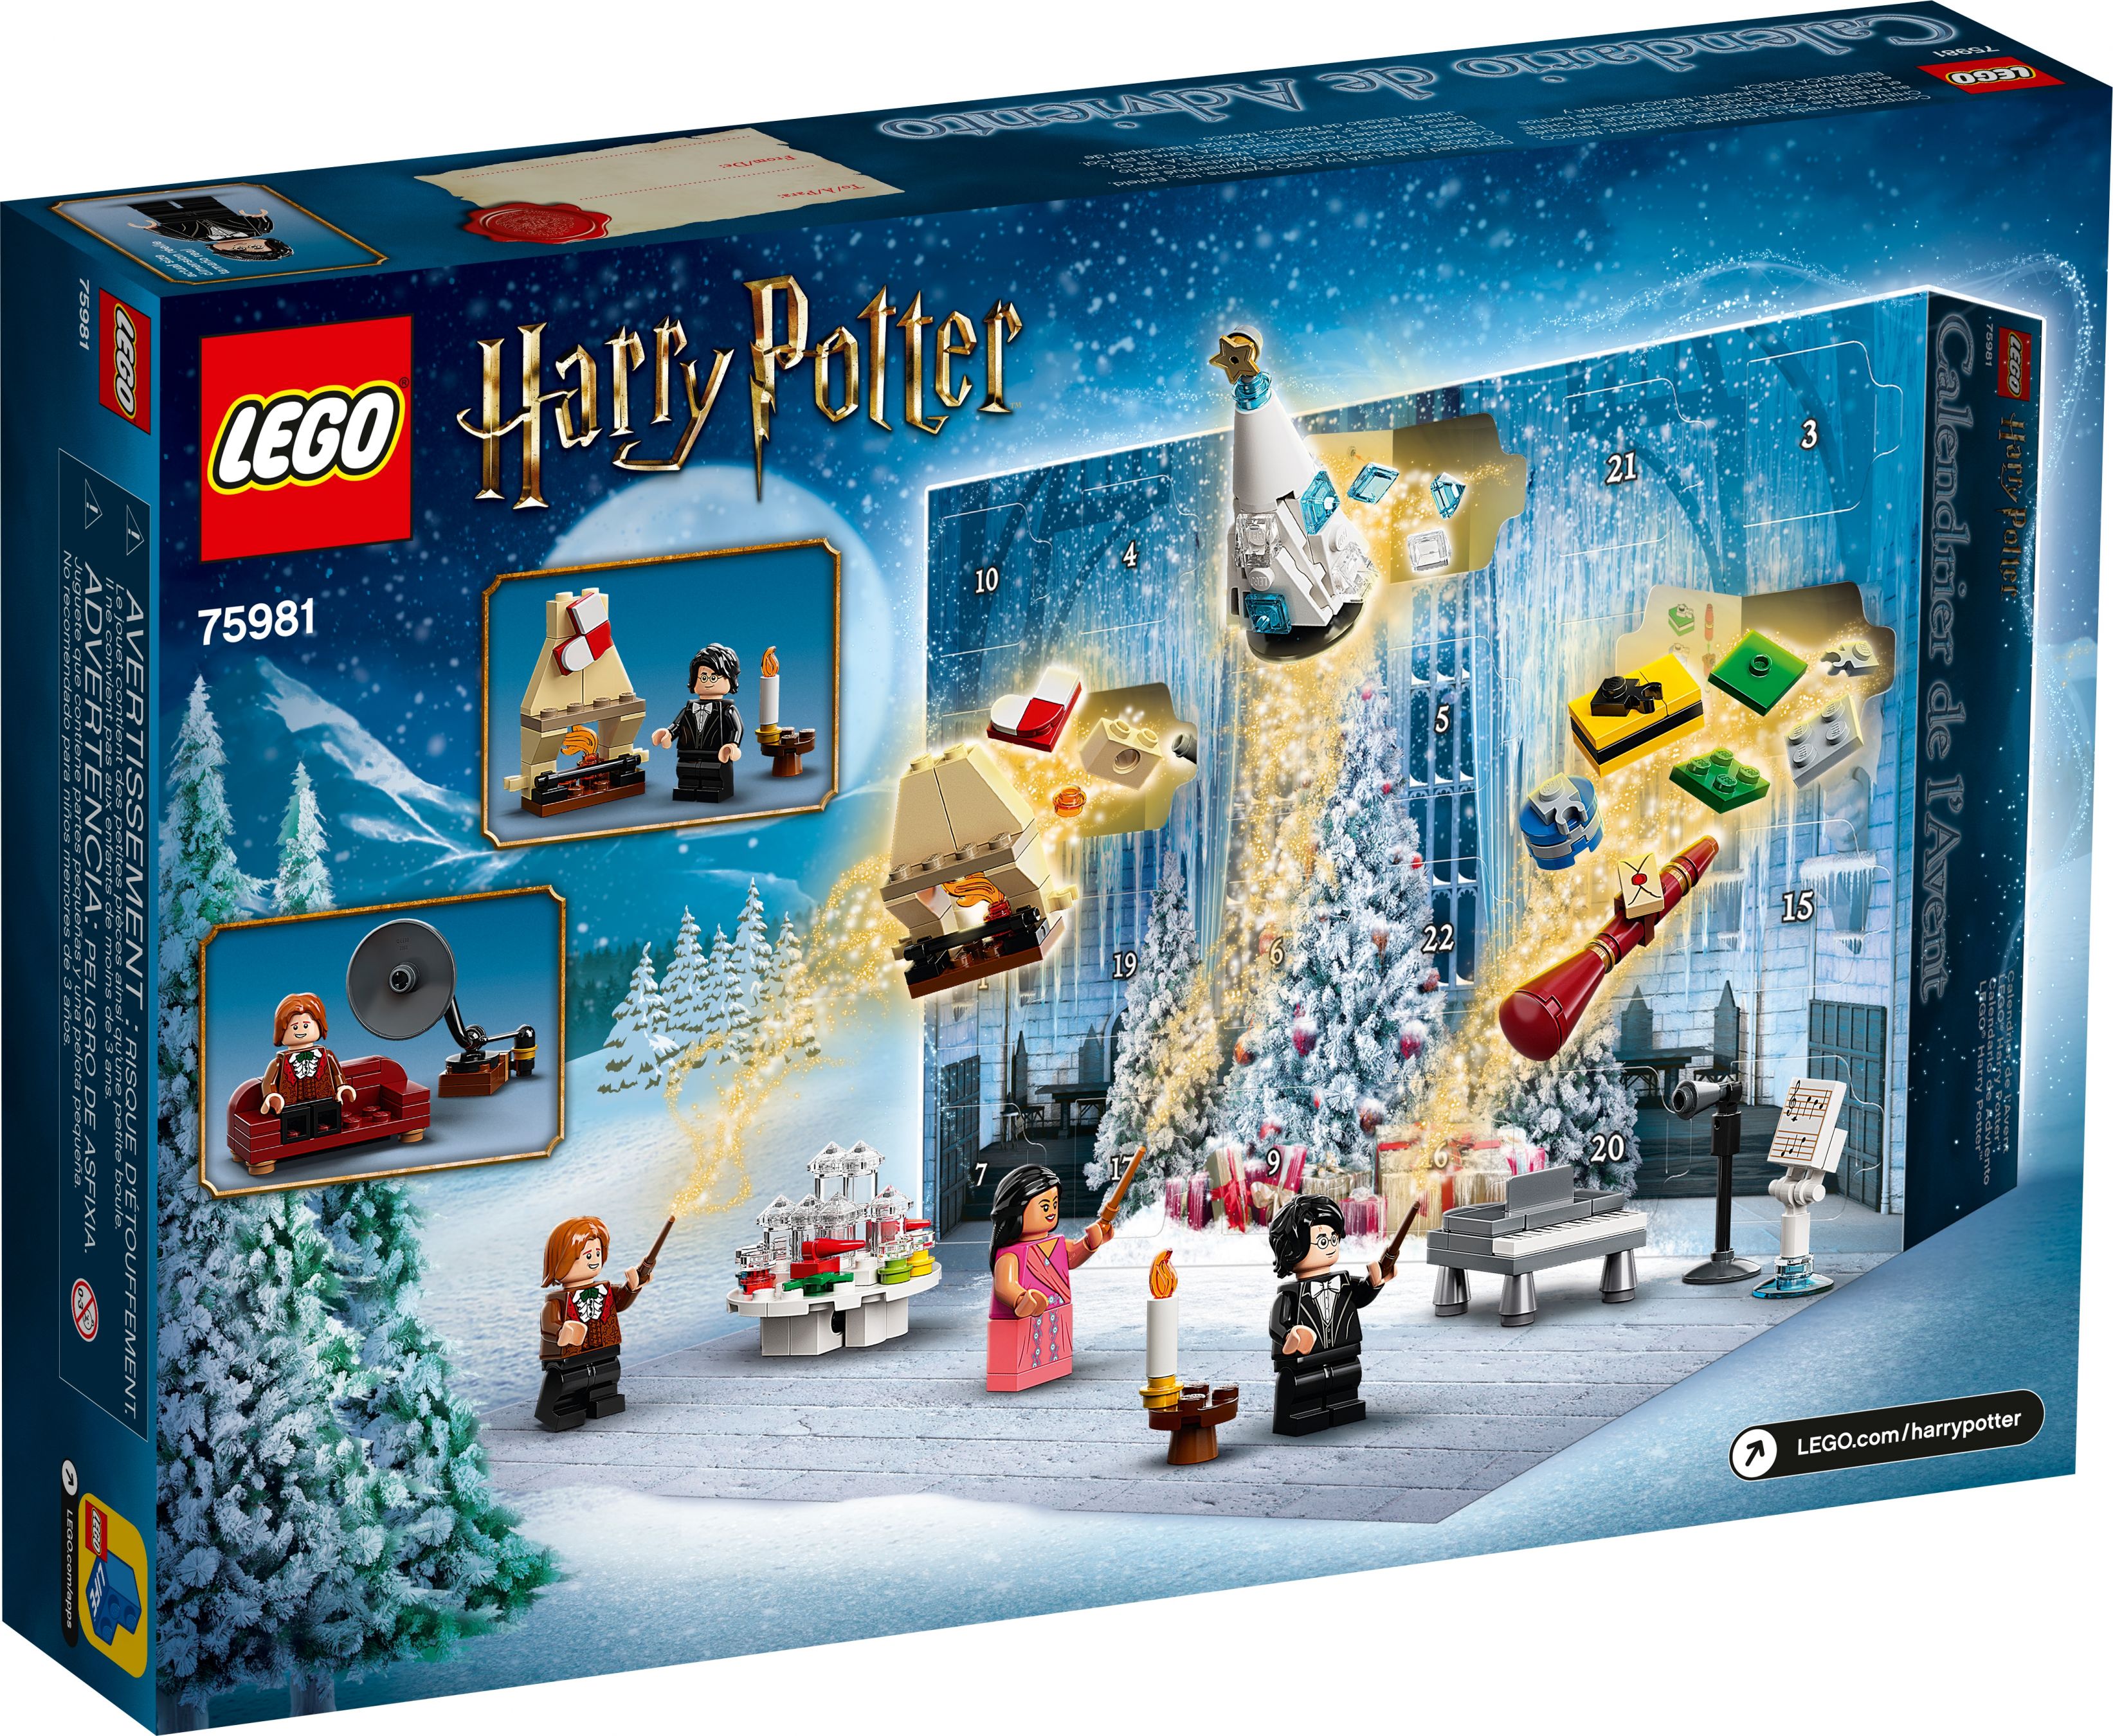 LEGO Harry Potter 75981 Harry Potter Adventskalender 2020 LEGO_75981_alt7.jpg